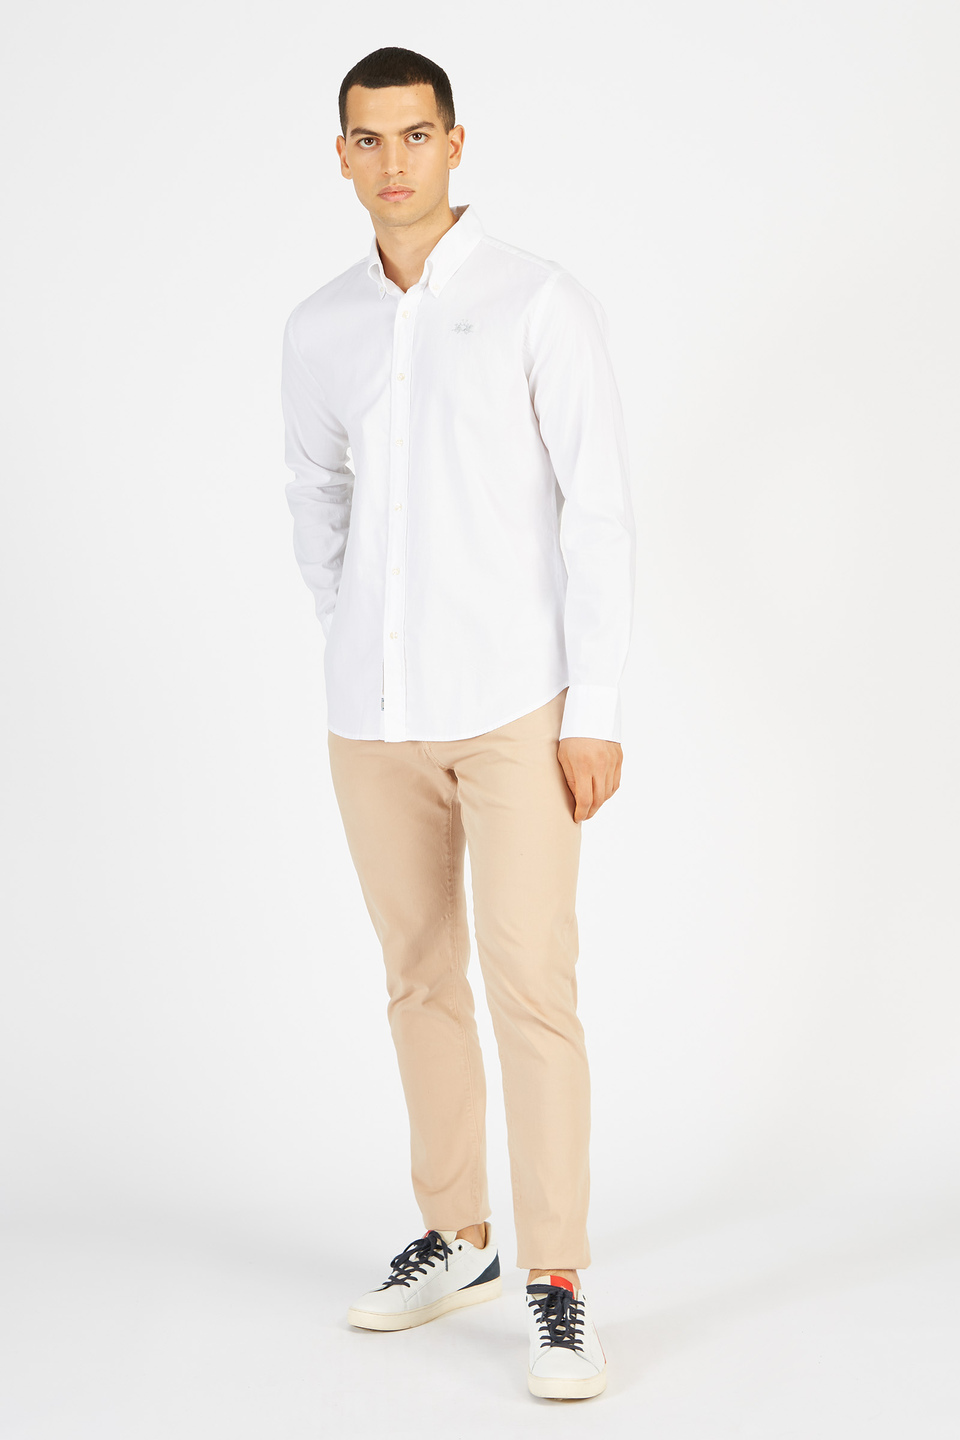 Men’s shirt in cotton slim fit long sleeves | La Martina - Official Online Shop